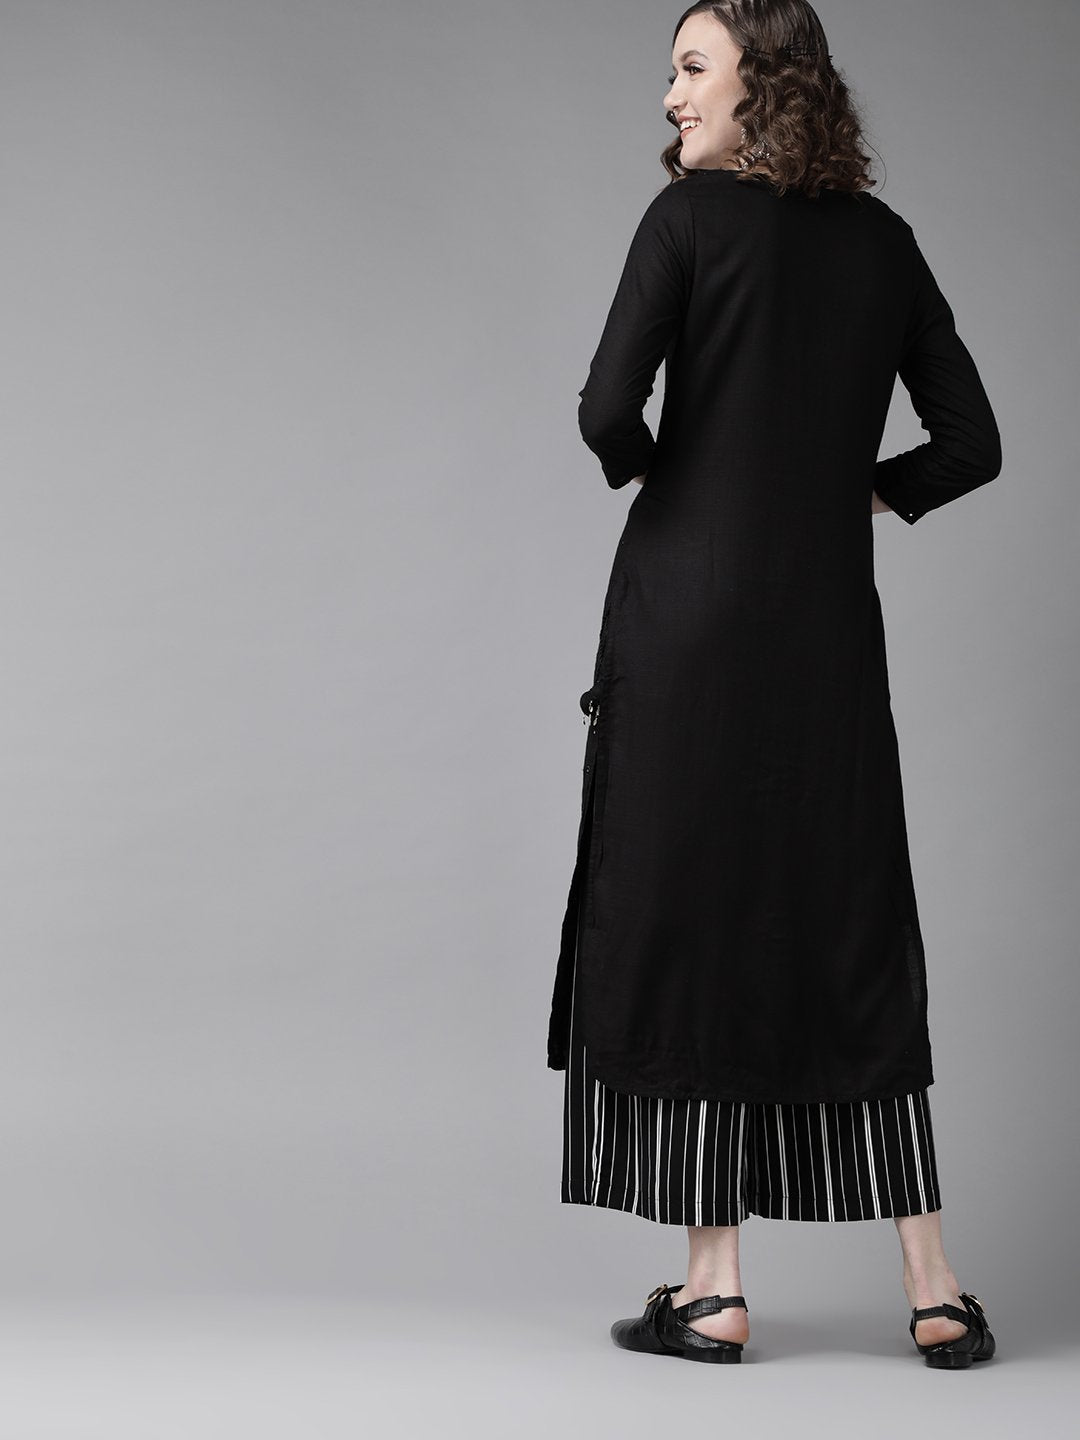 Ishin Women's Rayon Black Embellished A-Line Kurta